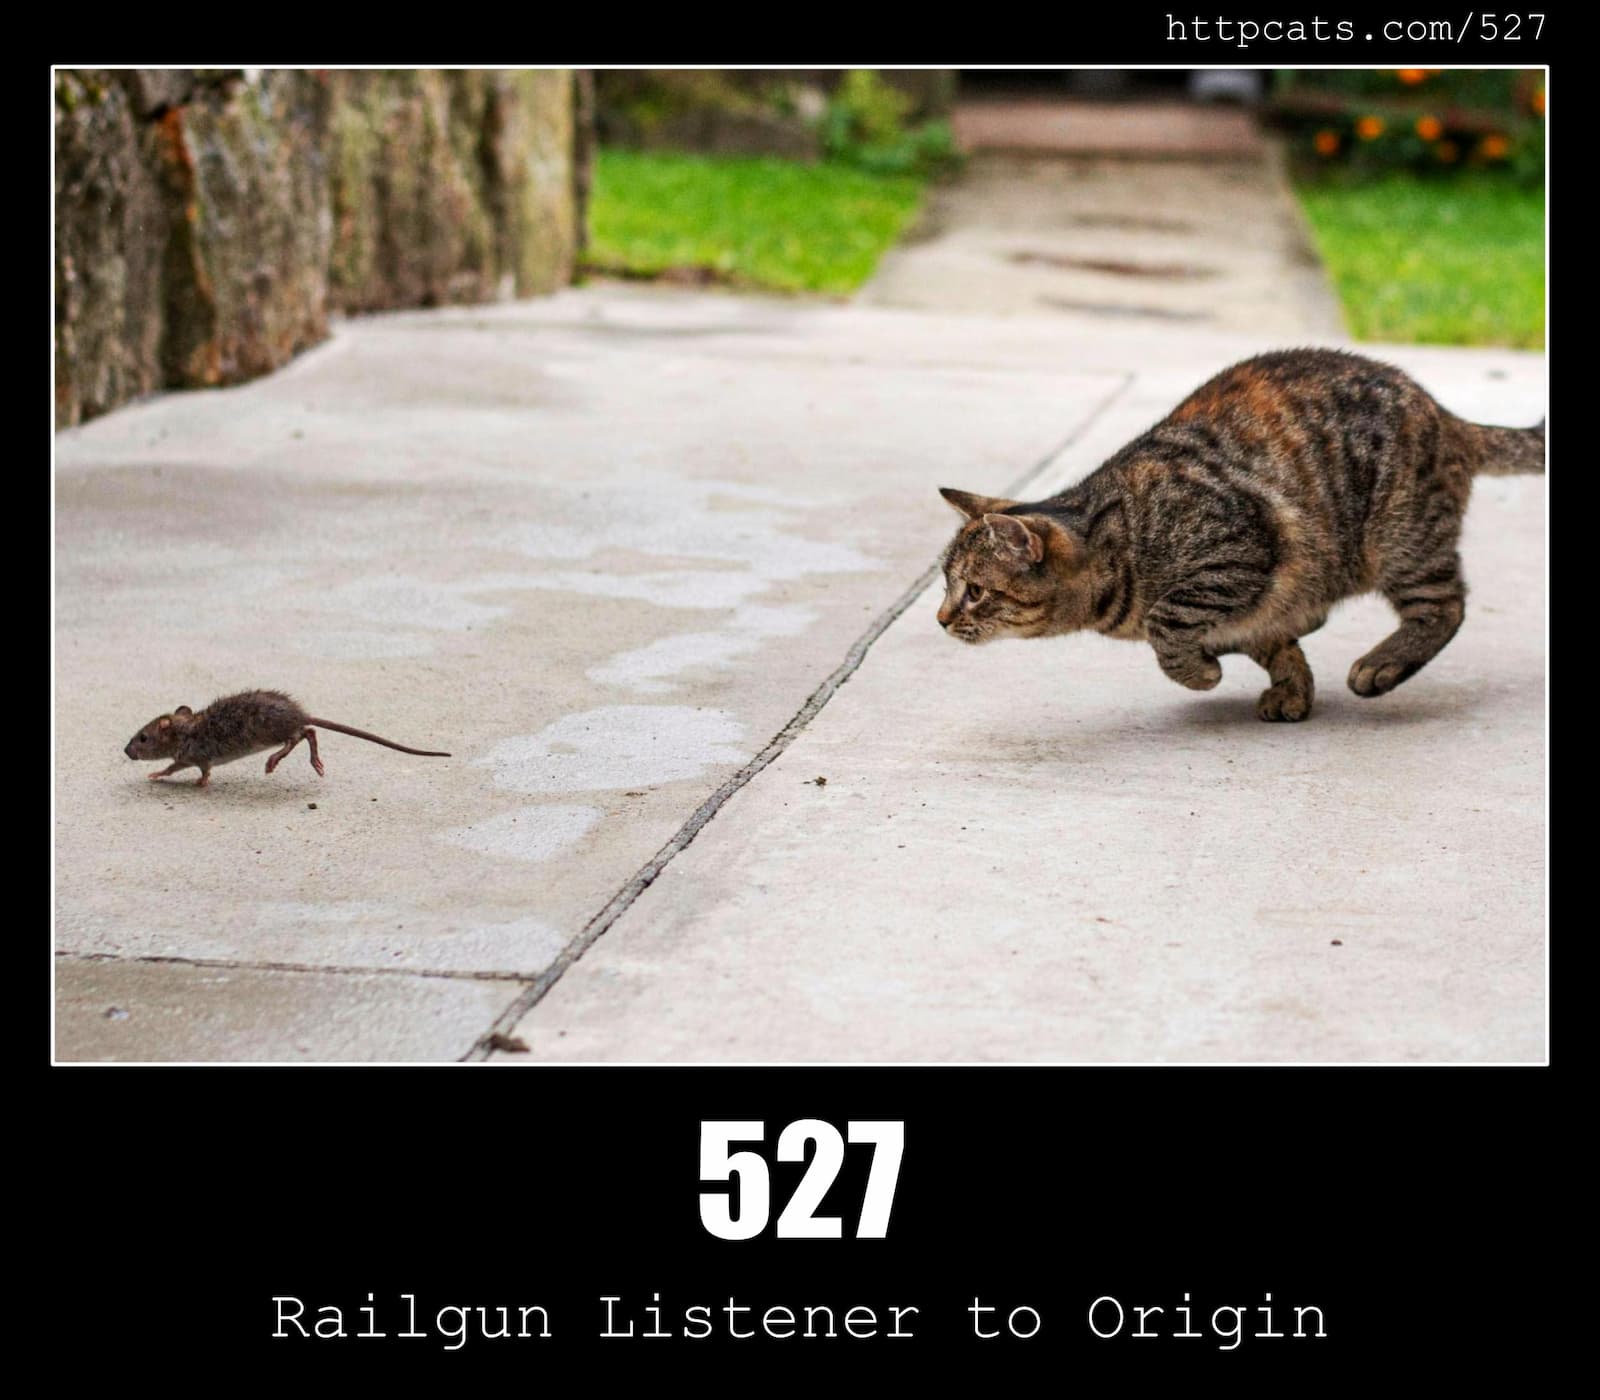 HTTP Status Code 527 Railgun Listener to Origin & Cats